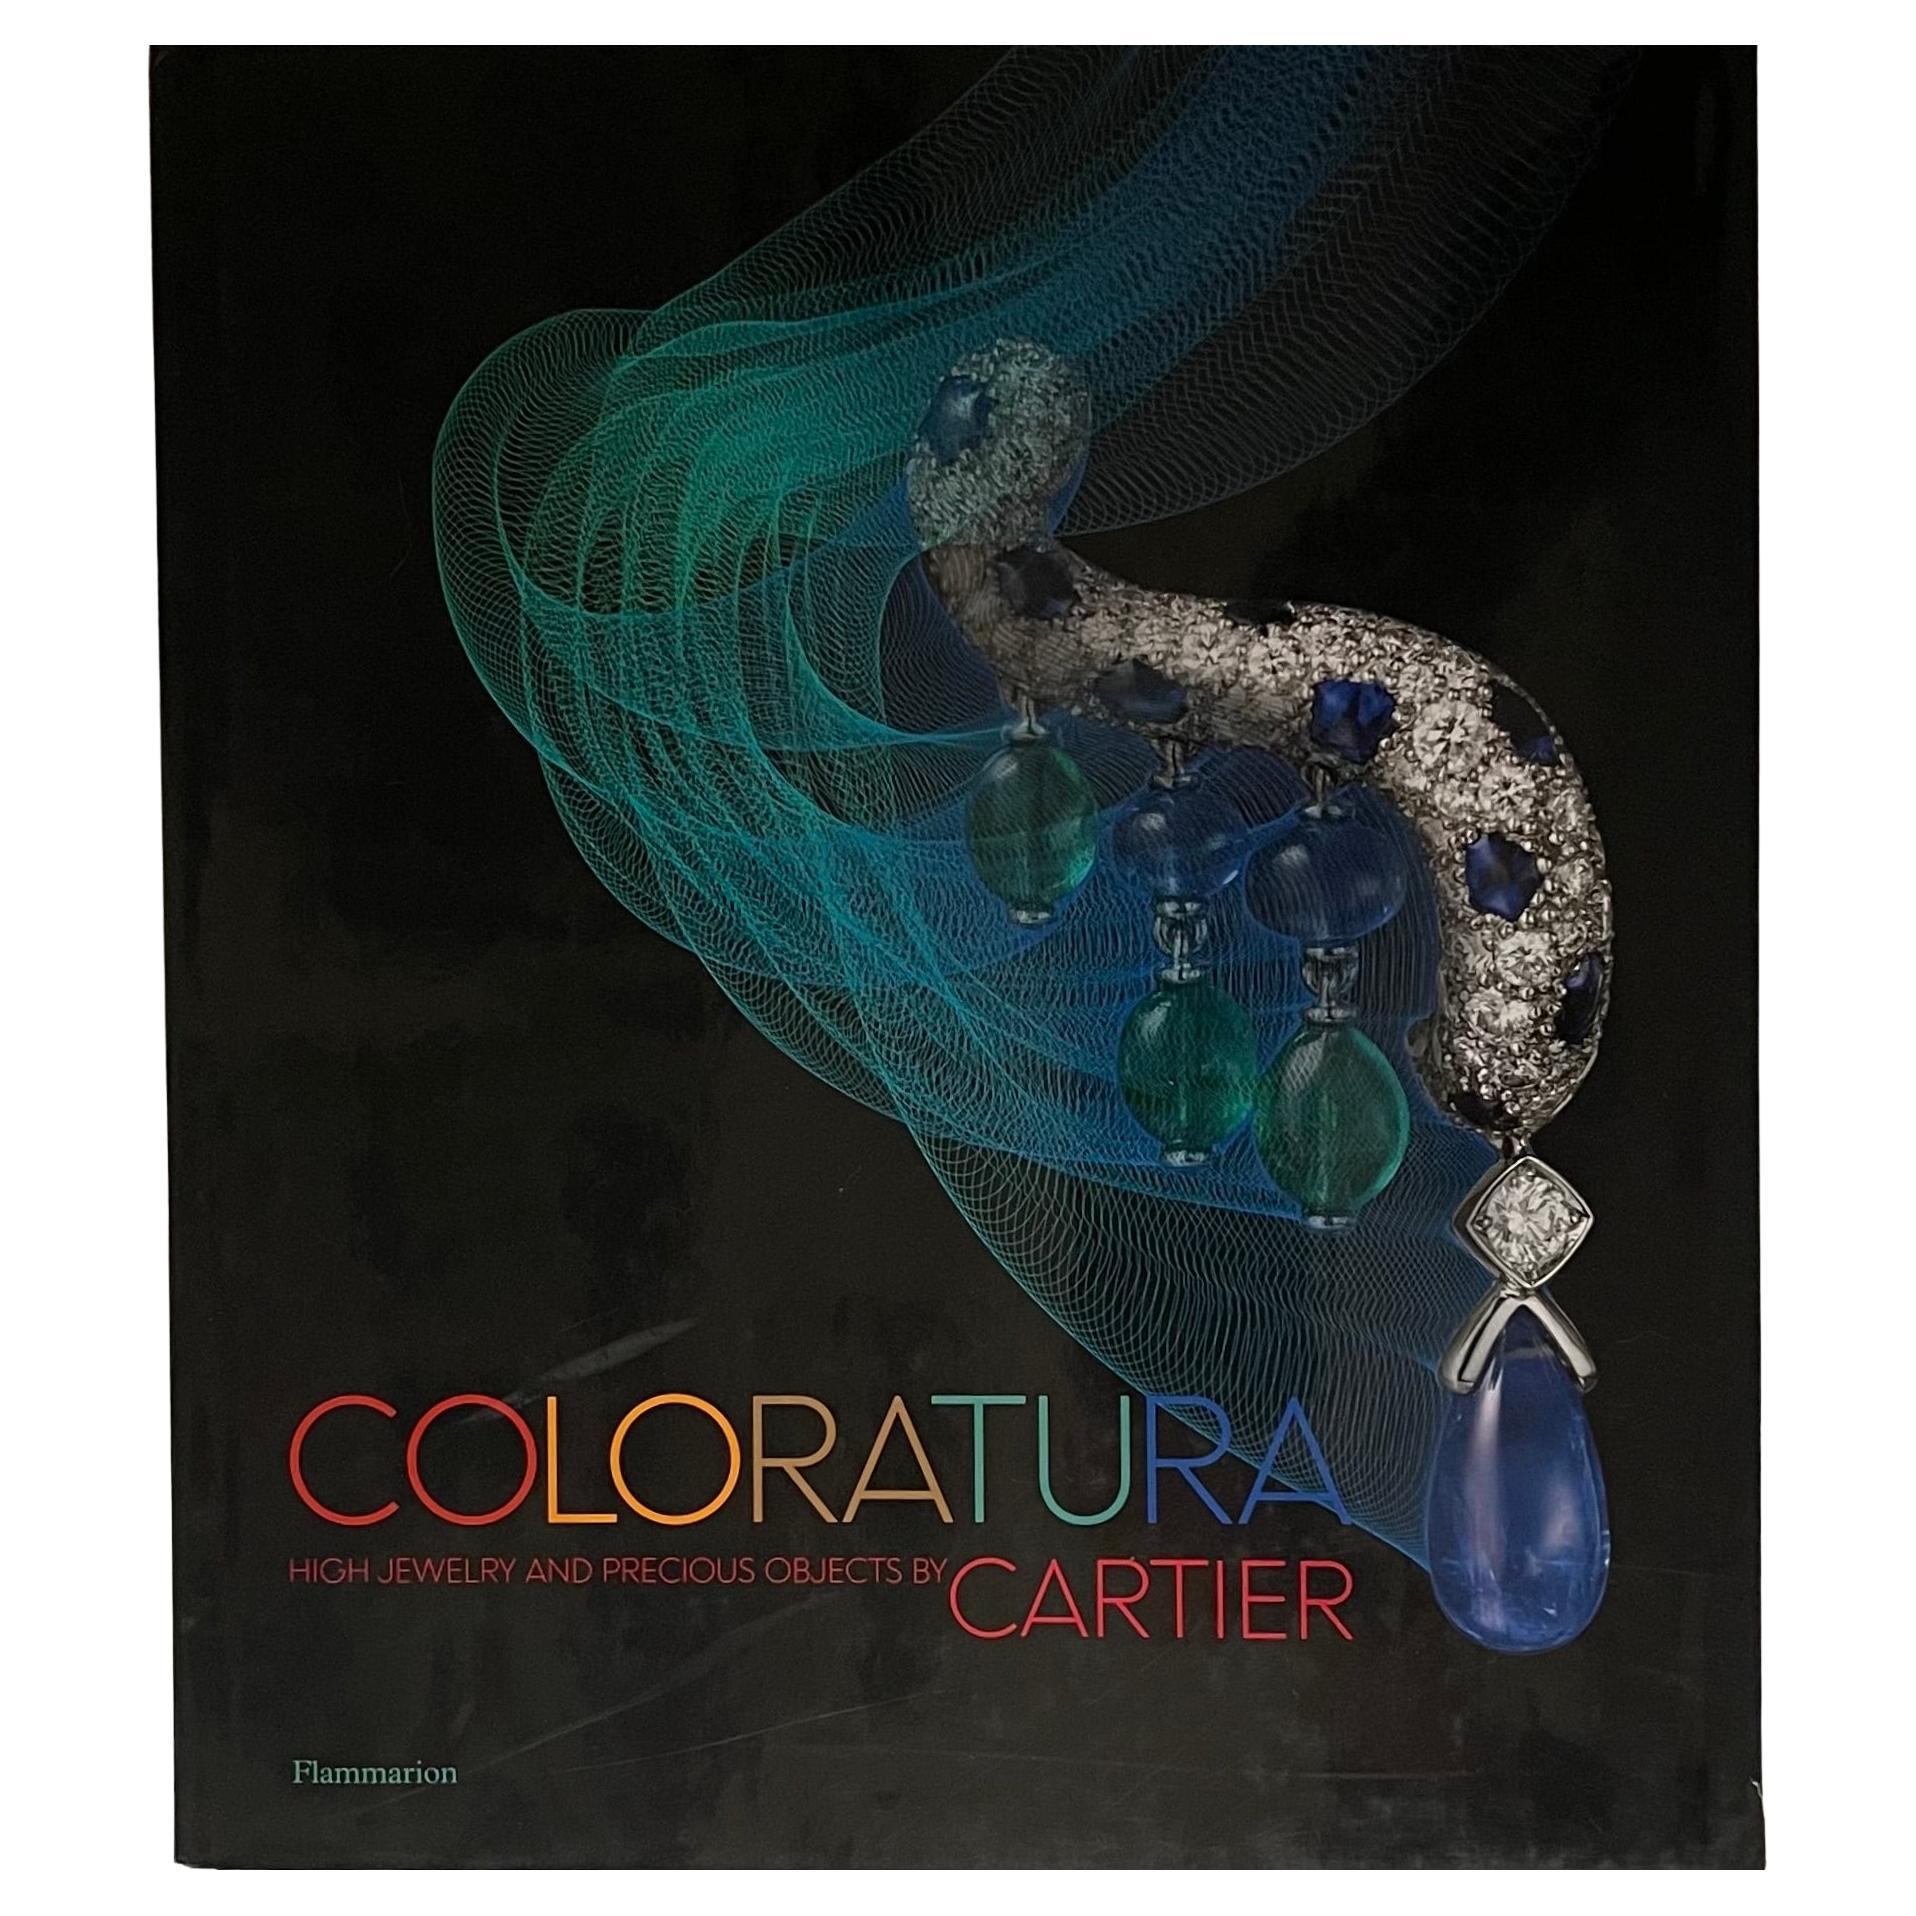 Cartier Coloratura 1st US ed. 2018 For Sale